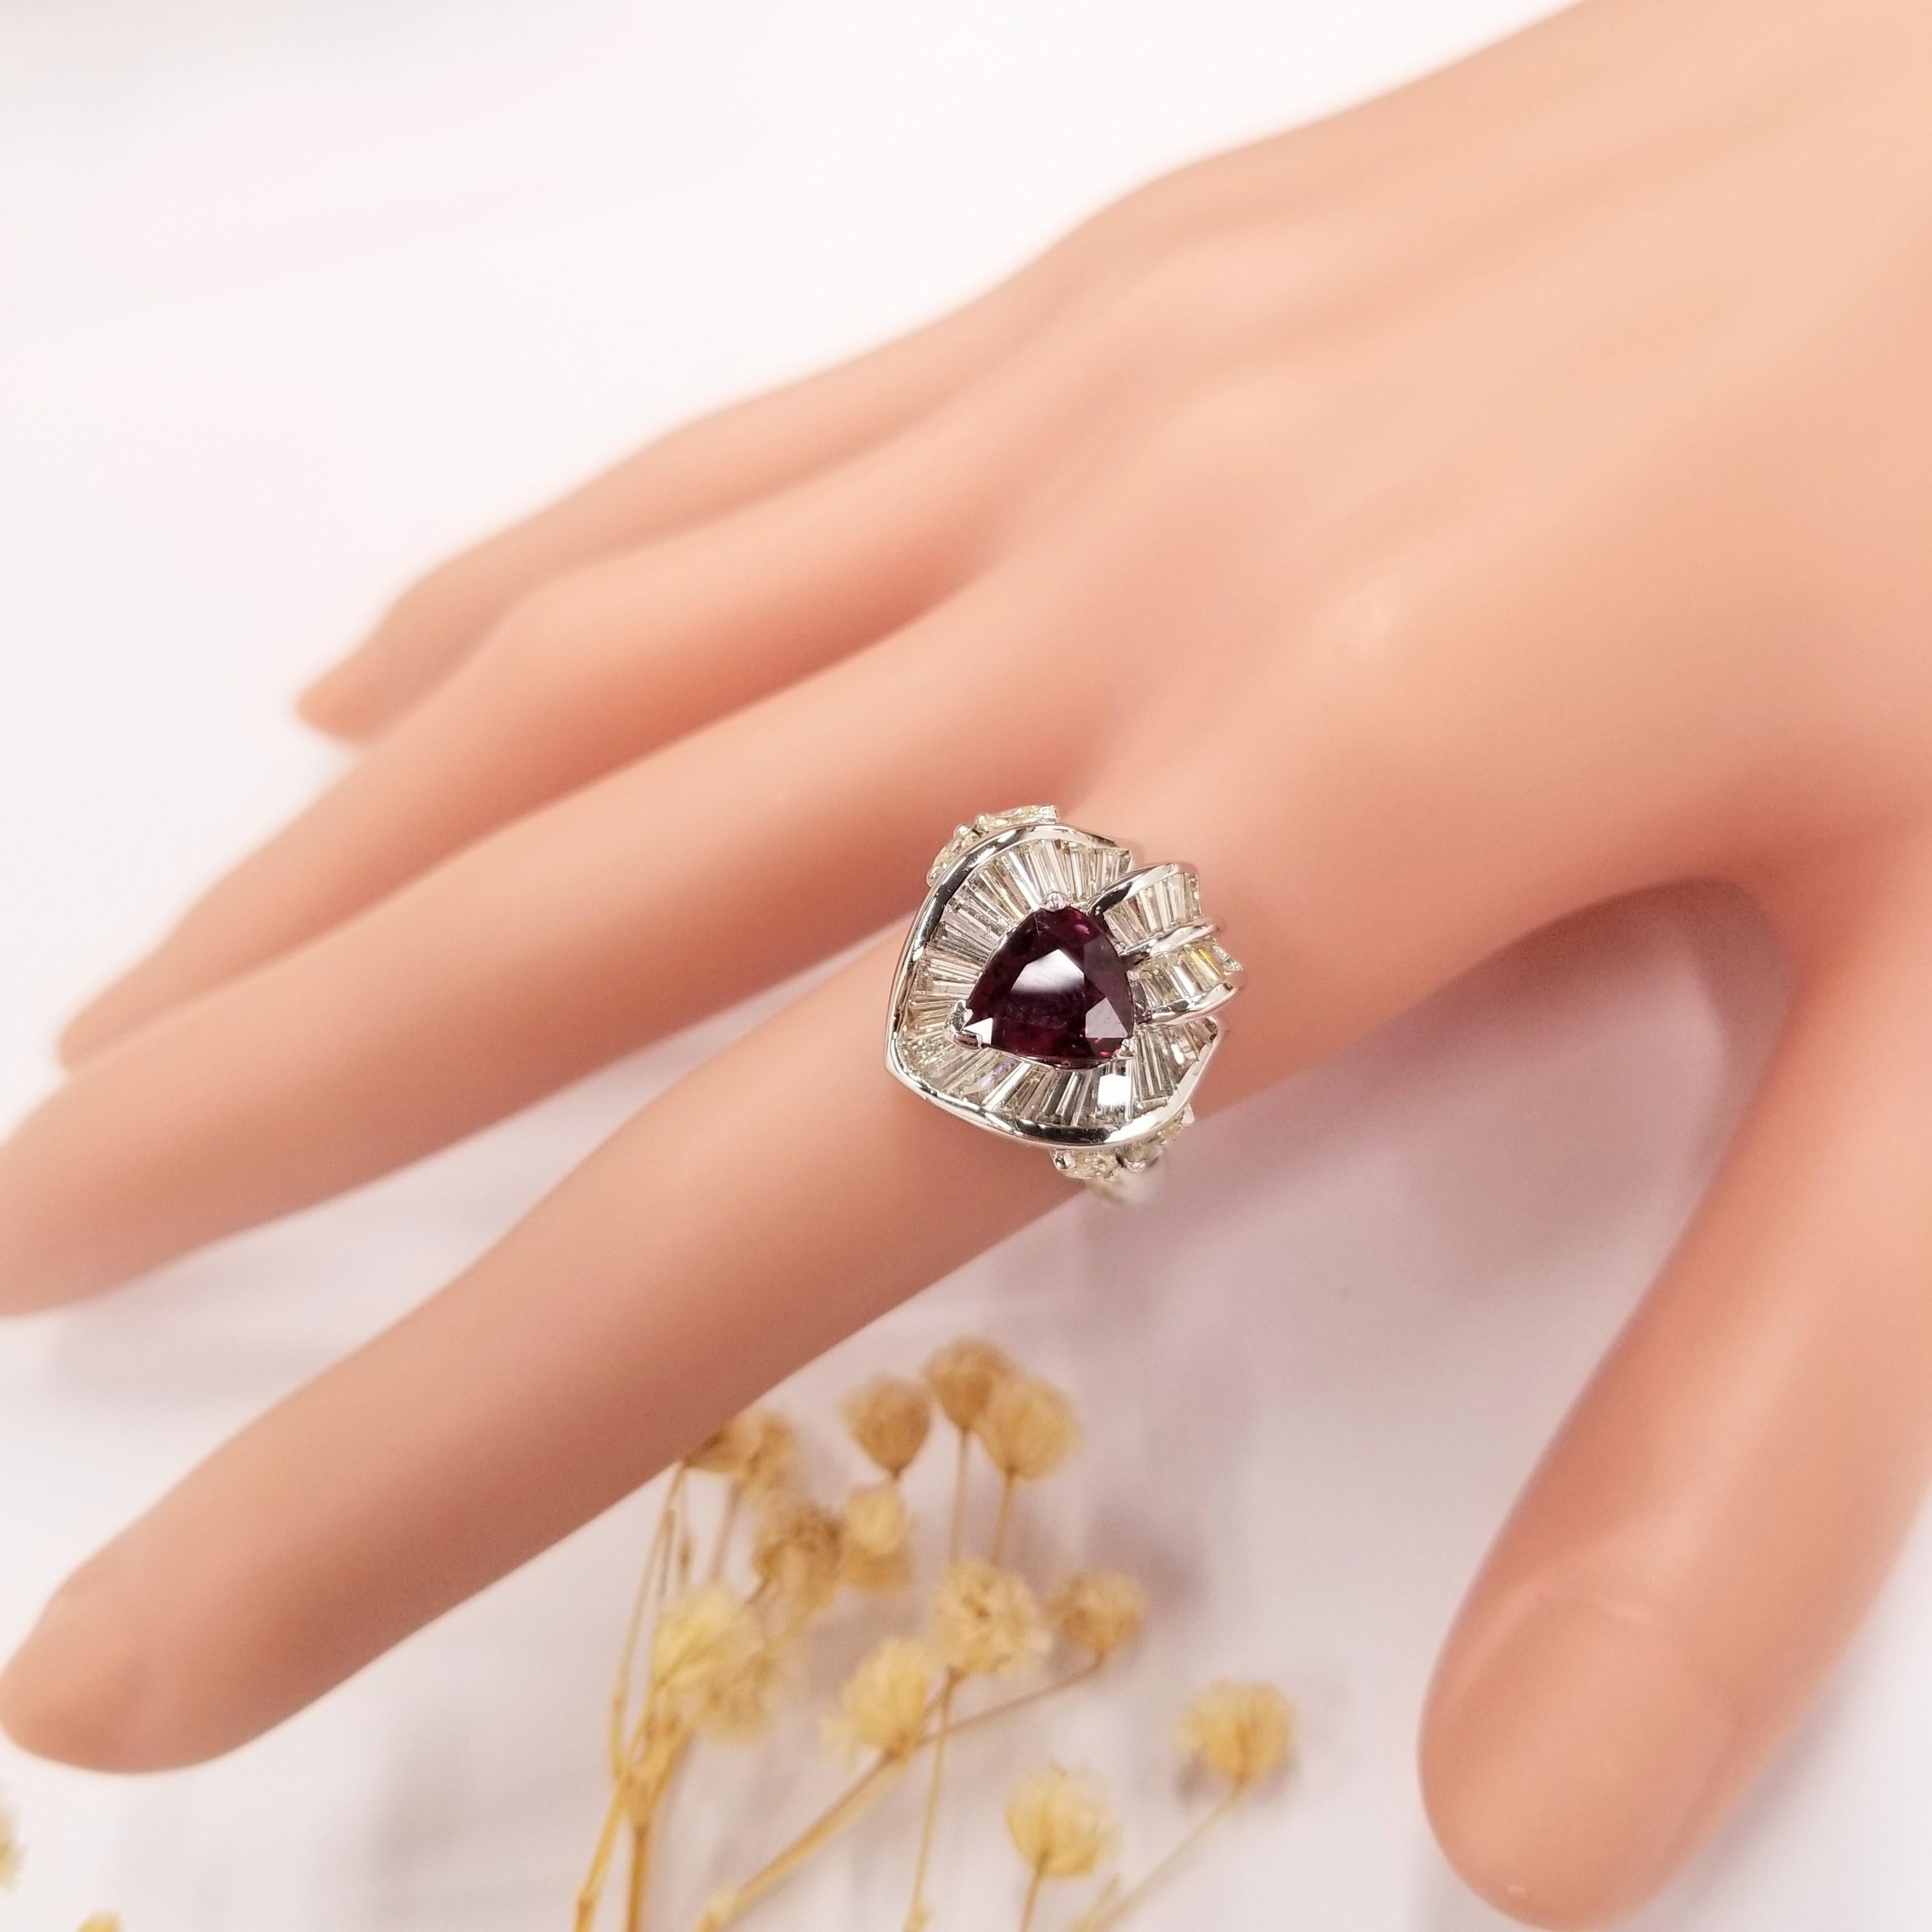 IGI Certified 1.35Carat Ruby & Diamond Ring in 18K White Gold For Sale 2